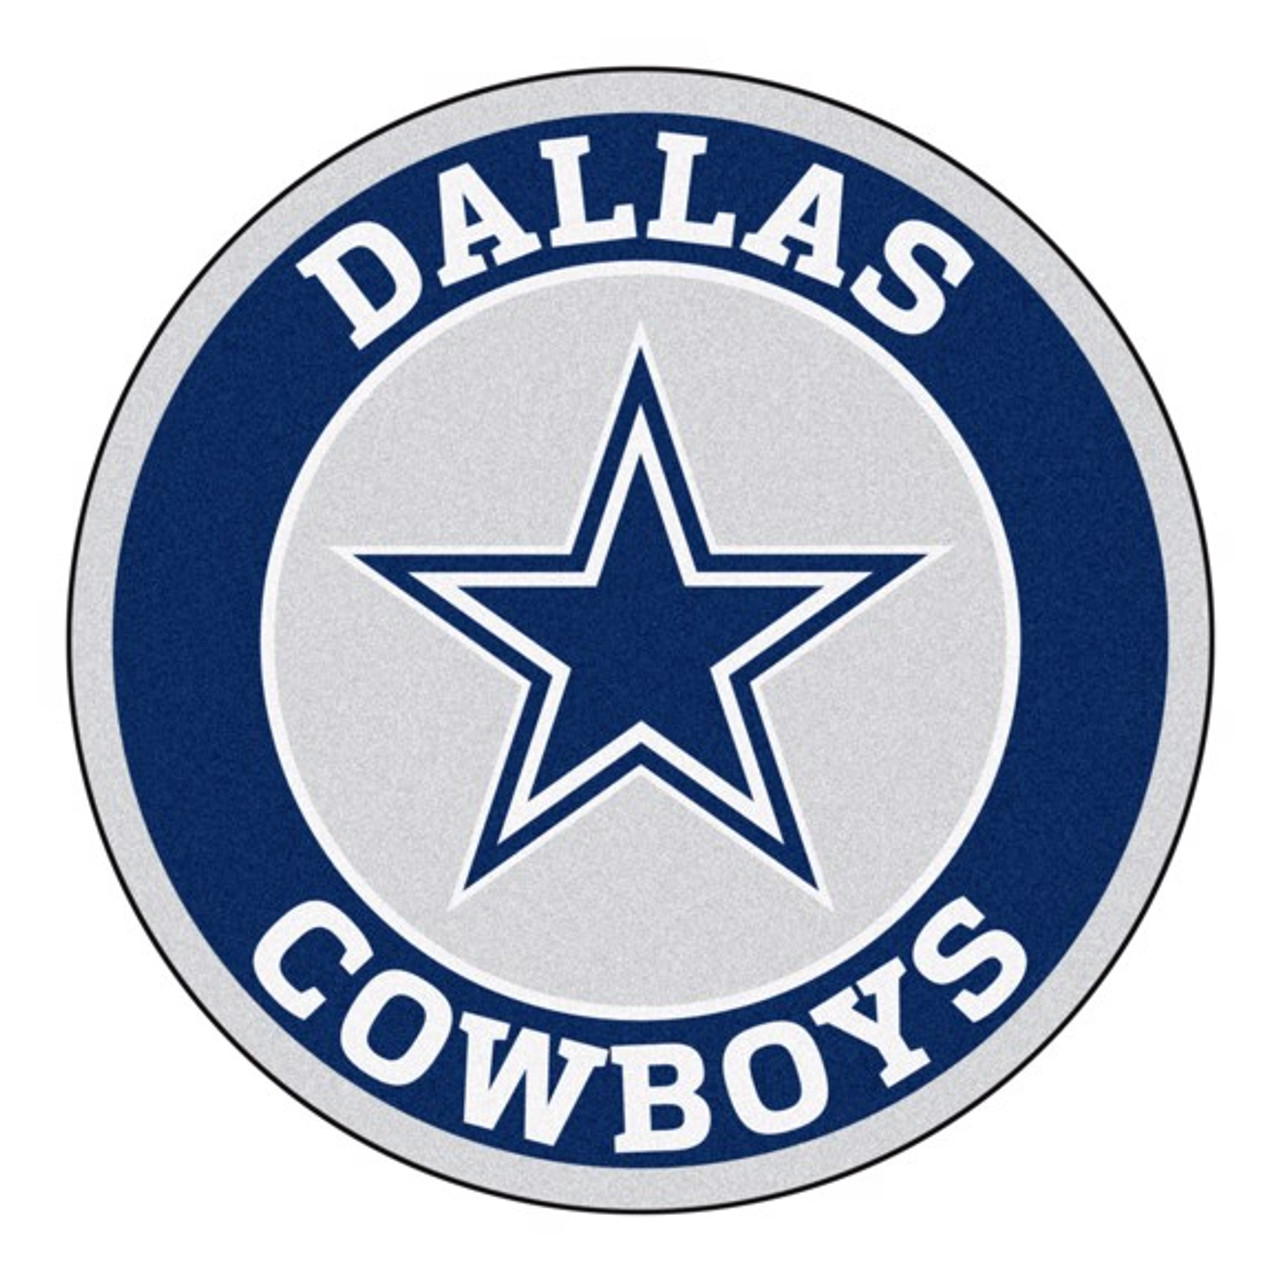 dallas cowboys logo design